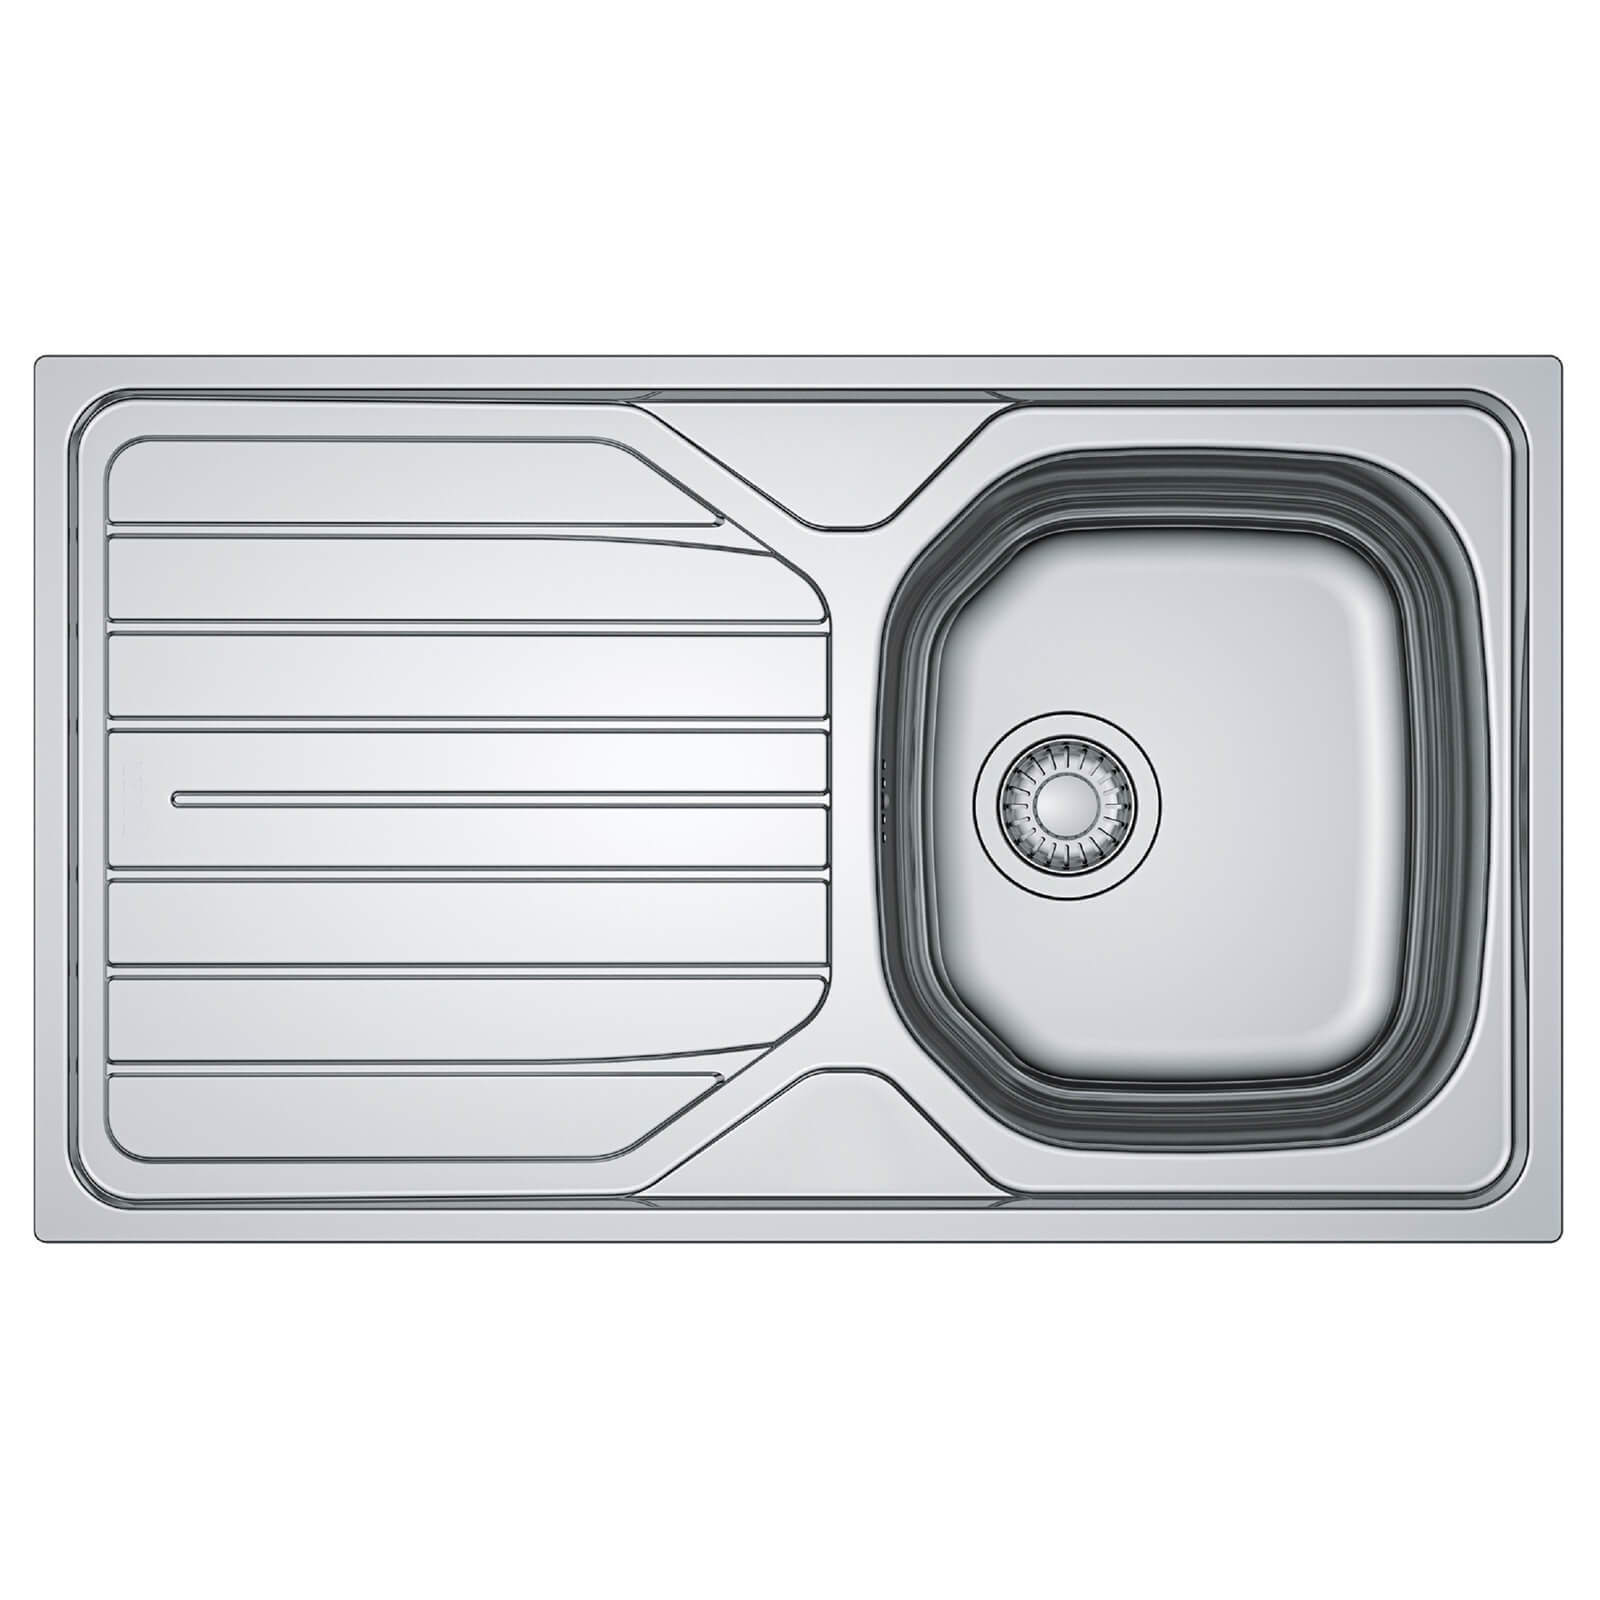 Mondella Resonance Compact Reversible Kitchen Sink - 1 Bowl